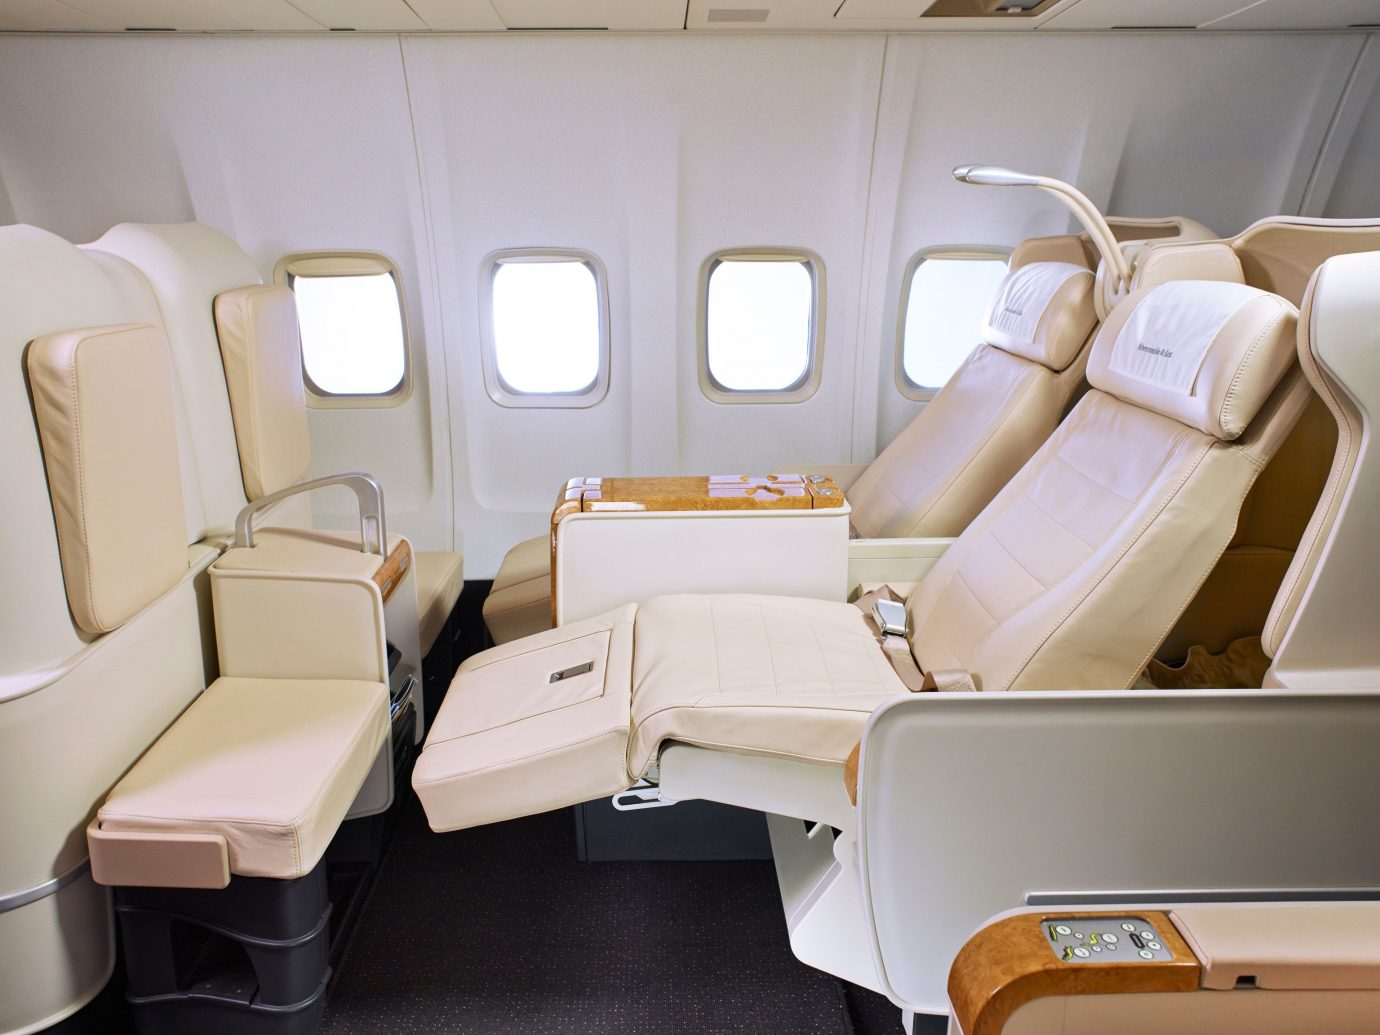 Luxury Travel Trip Ideas indoor floor airline vehicle Cabin aircraft cabin passenger furniture